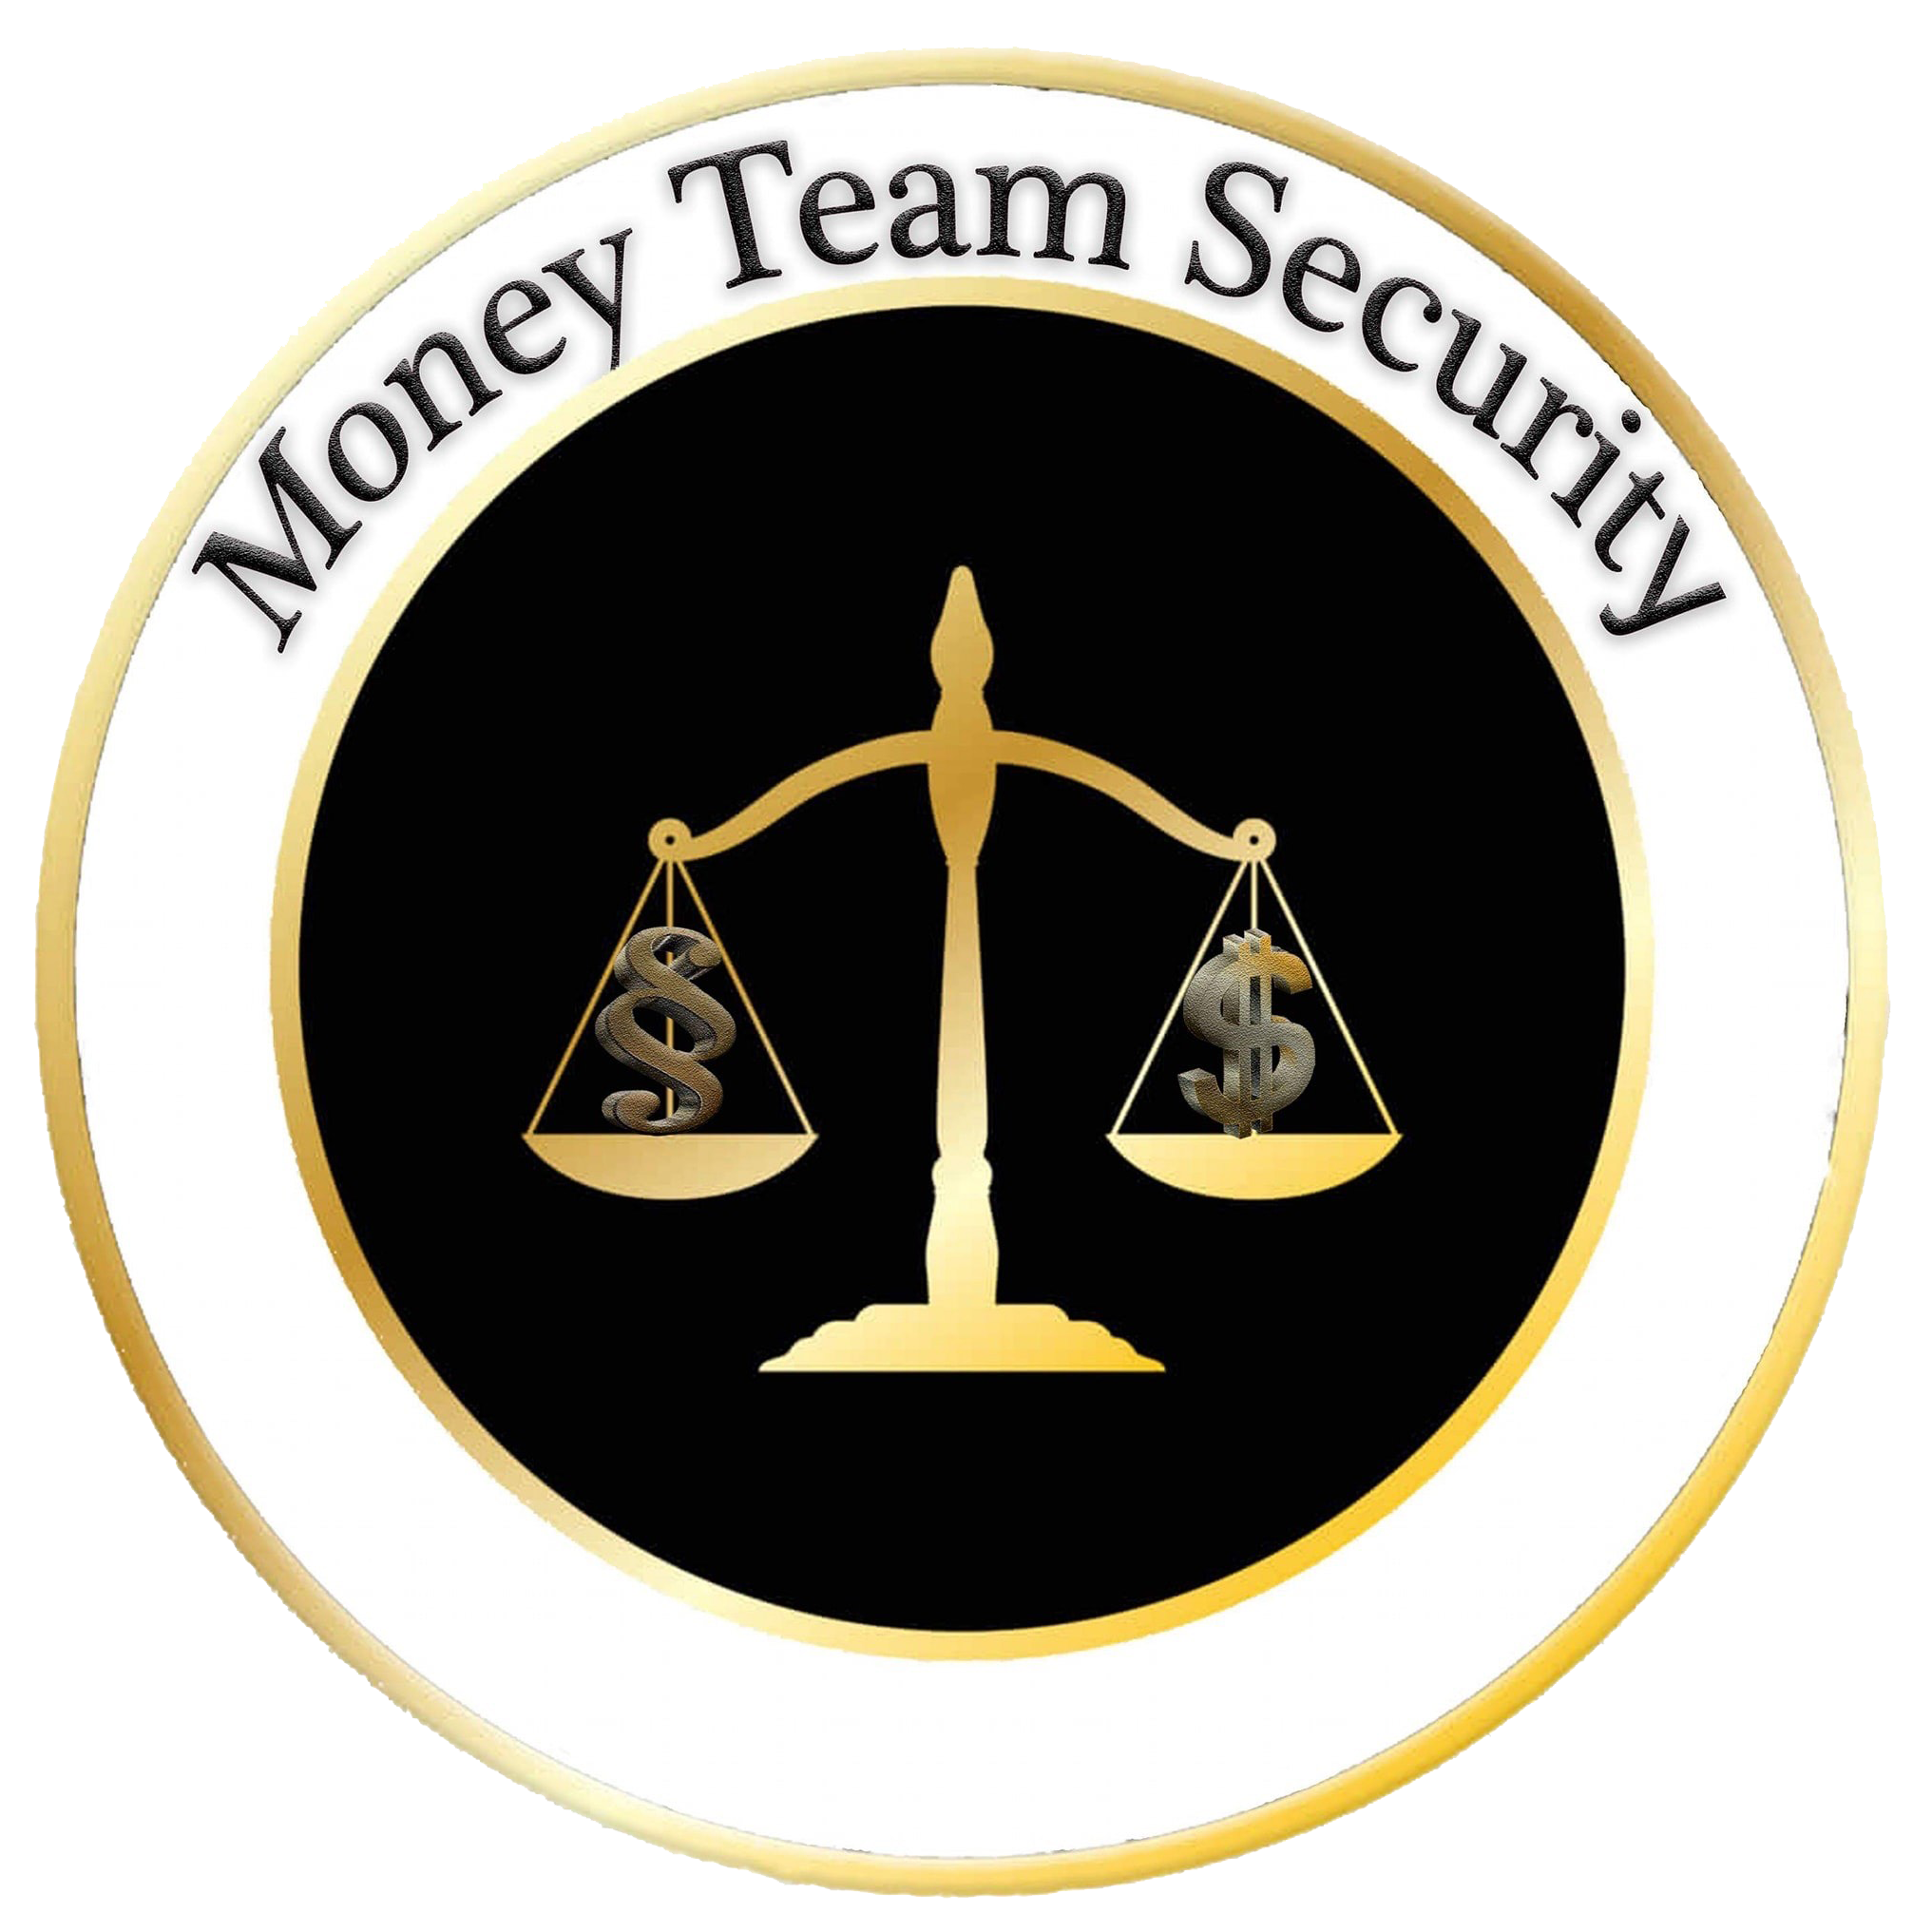 Money Team Security